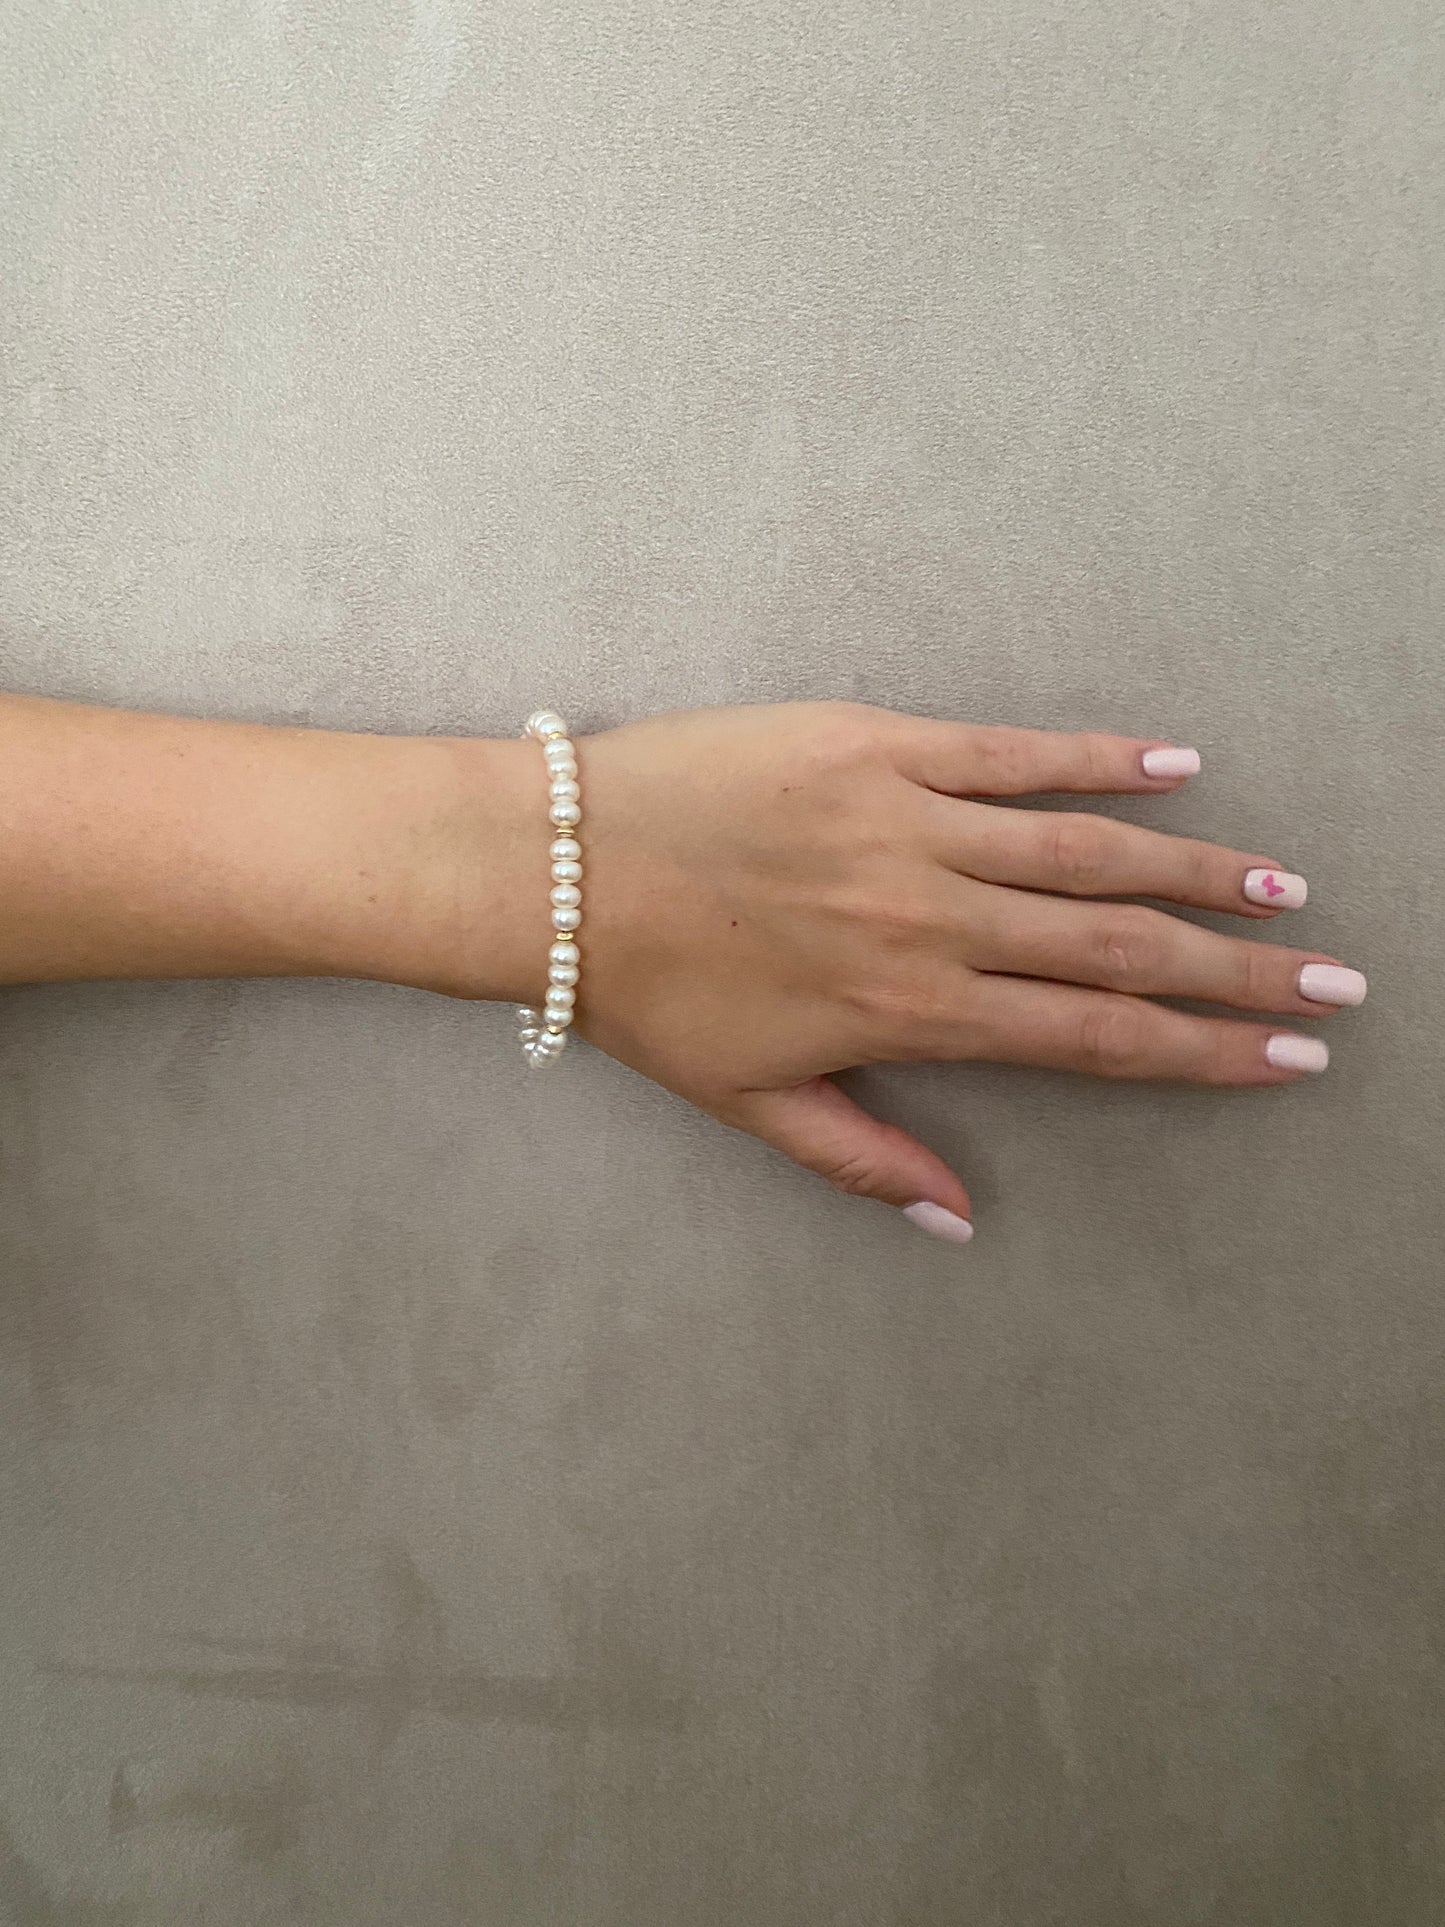 Pearl bracelet with gold details in 14KT Goldfilled.